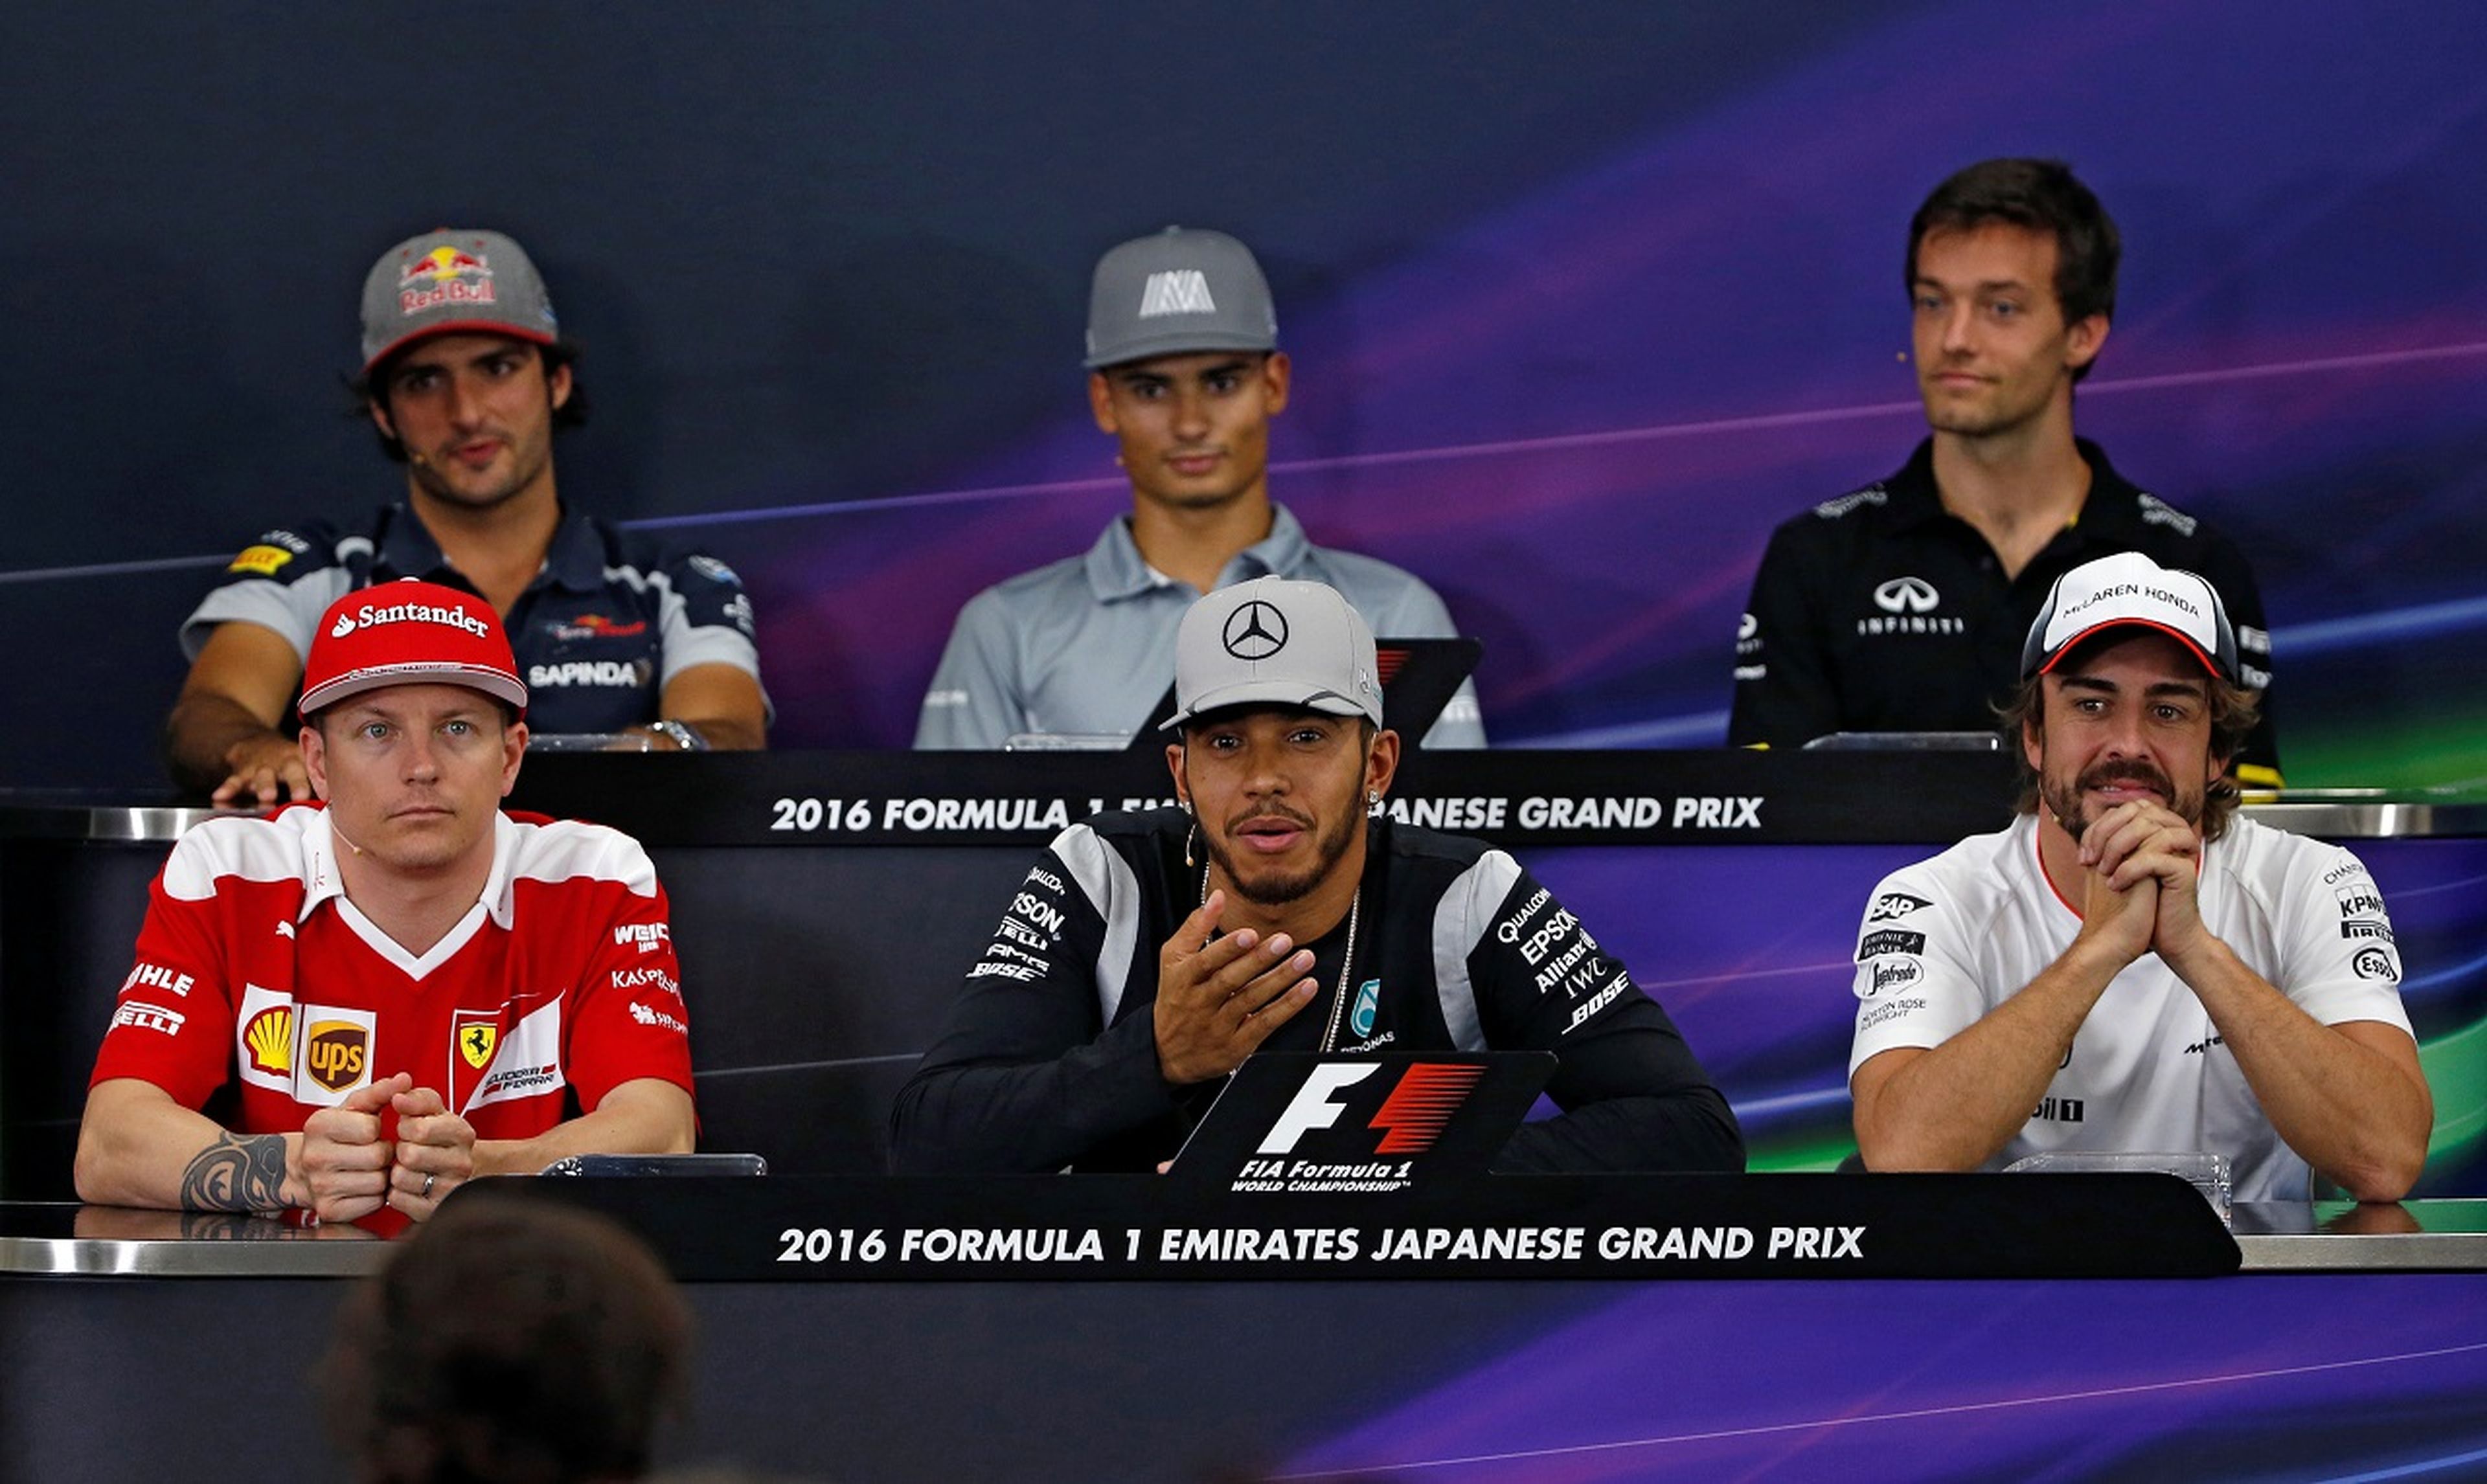 De izquierda a derecha y de arriba a abajo, Carlos Sainz, Pascal Wehrlein, Jolyon Palmer, Kimi Räikkönen, Lewis Hamilton y Fernando Alonso